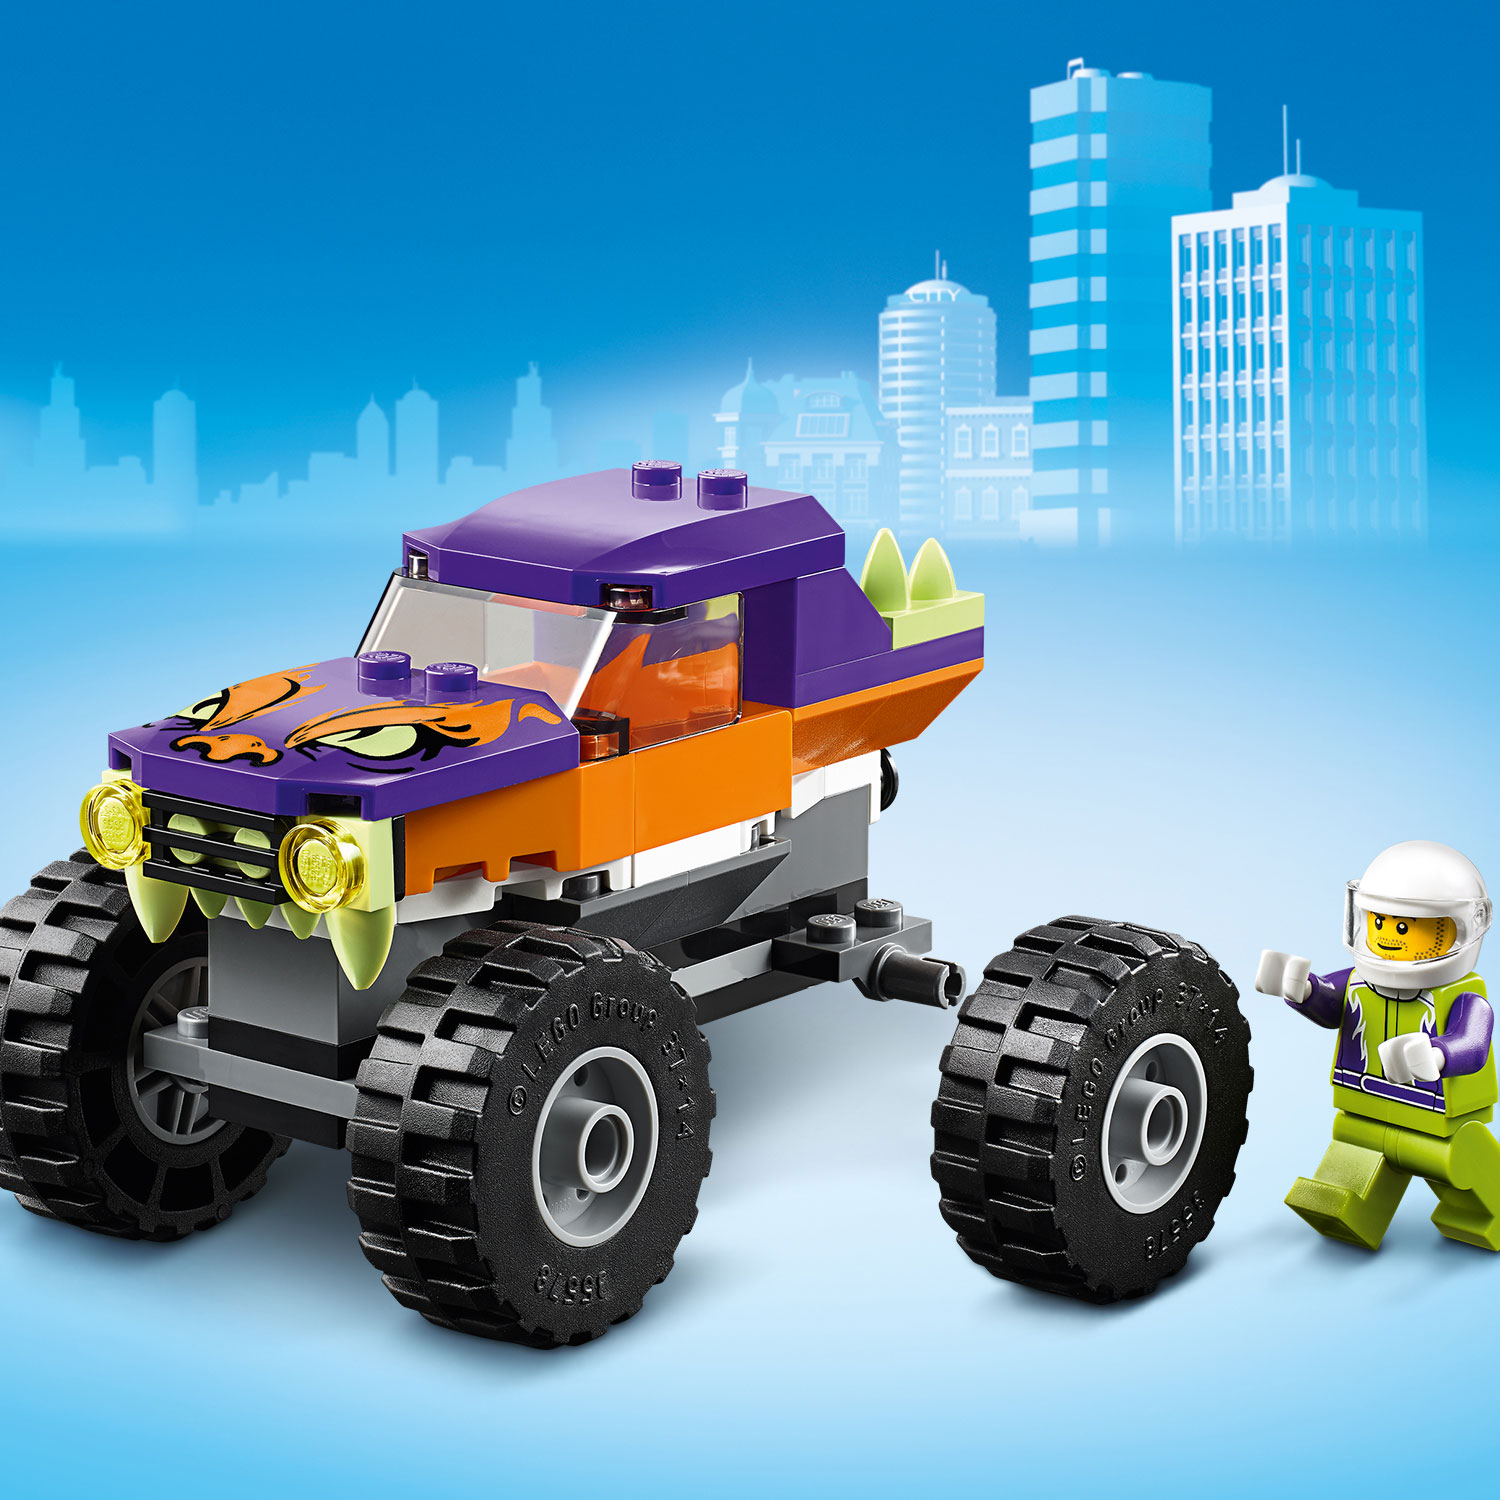 Конструктор LEGO City Great Vehicles 60251 Монстр-трак